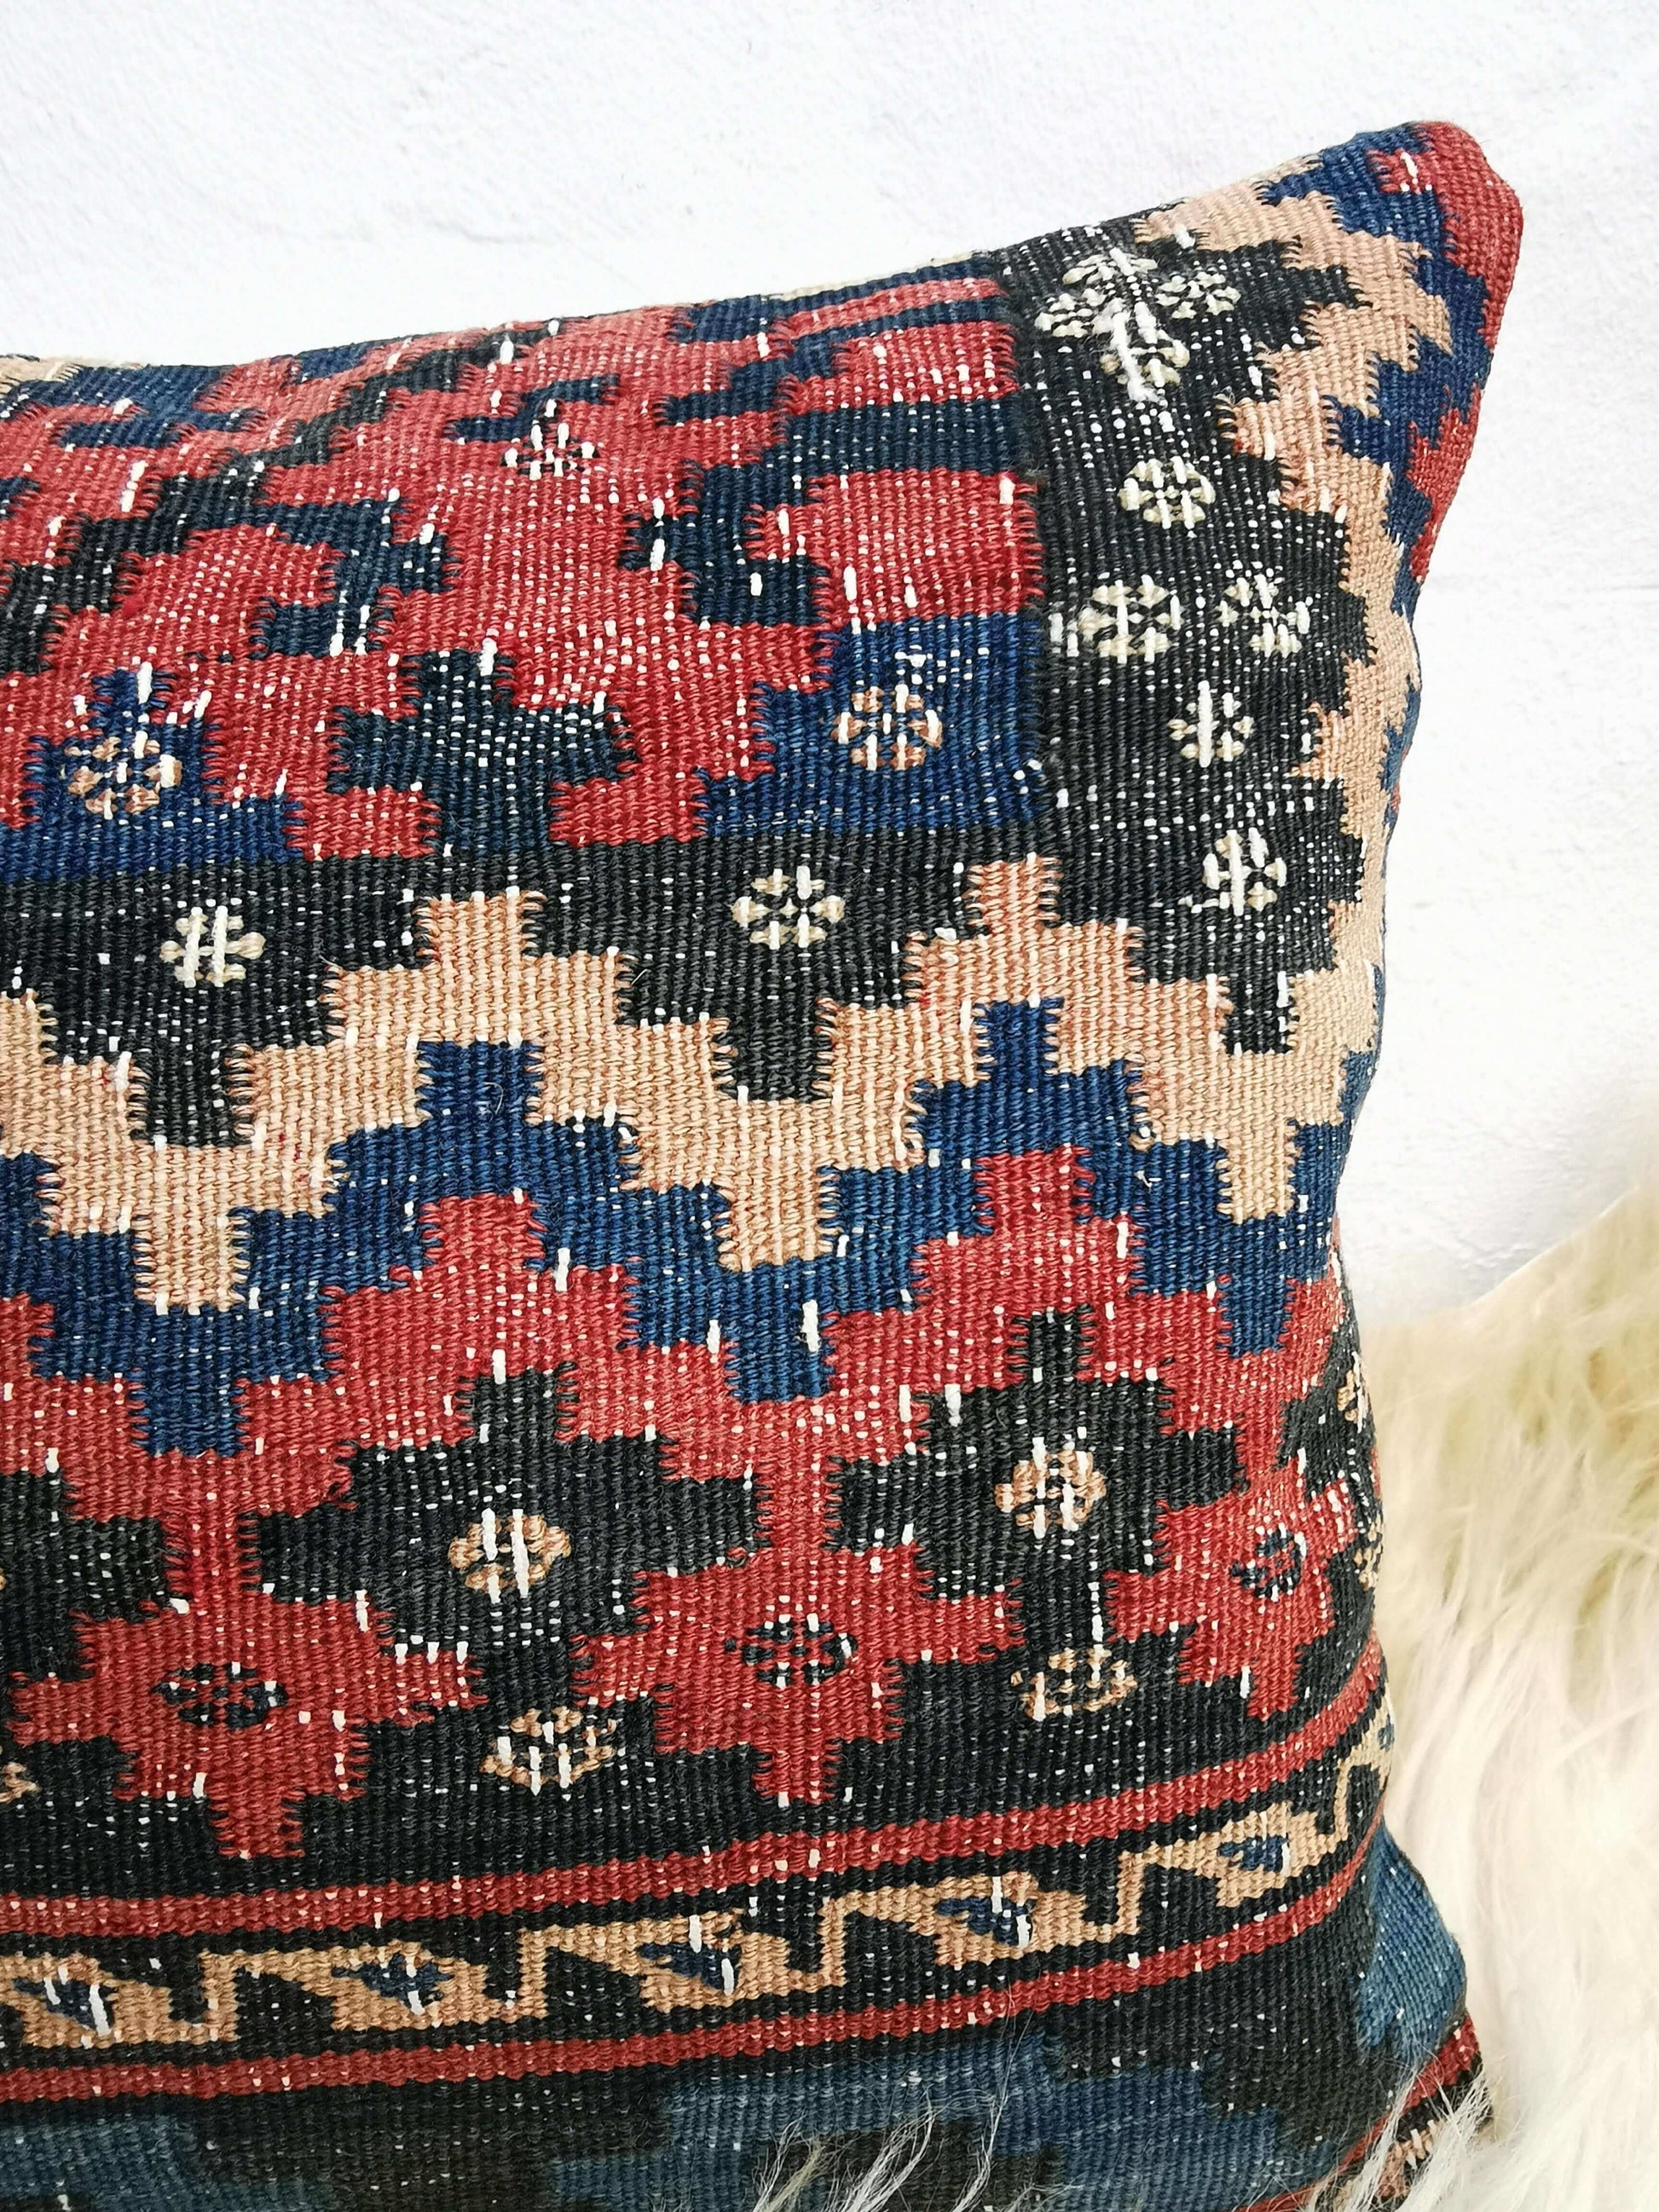 Kilim Pillow Cover, Turkey, old, unique, vintage, Kelim, Kelimkissen, Kissenhülle, pillow case, boho, eclectic, arabic design, Turkish, Anatolian, throwpillow, hygge